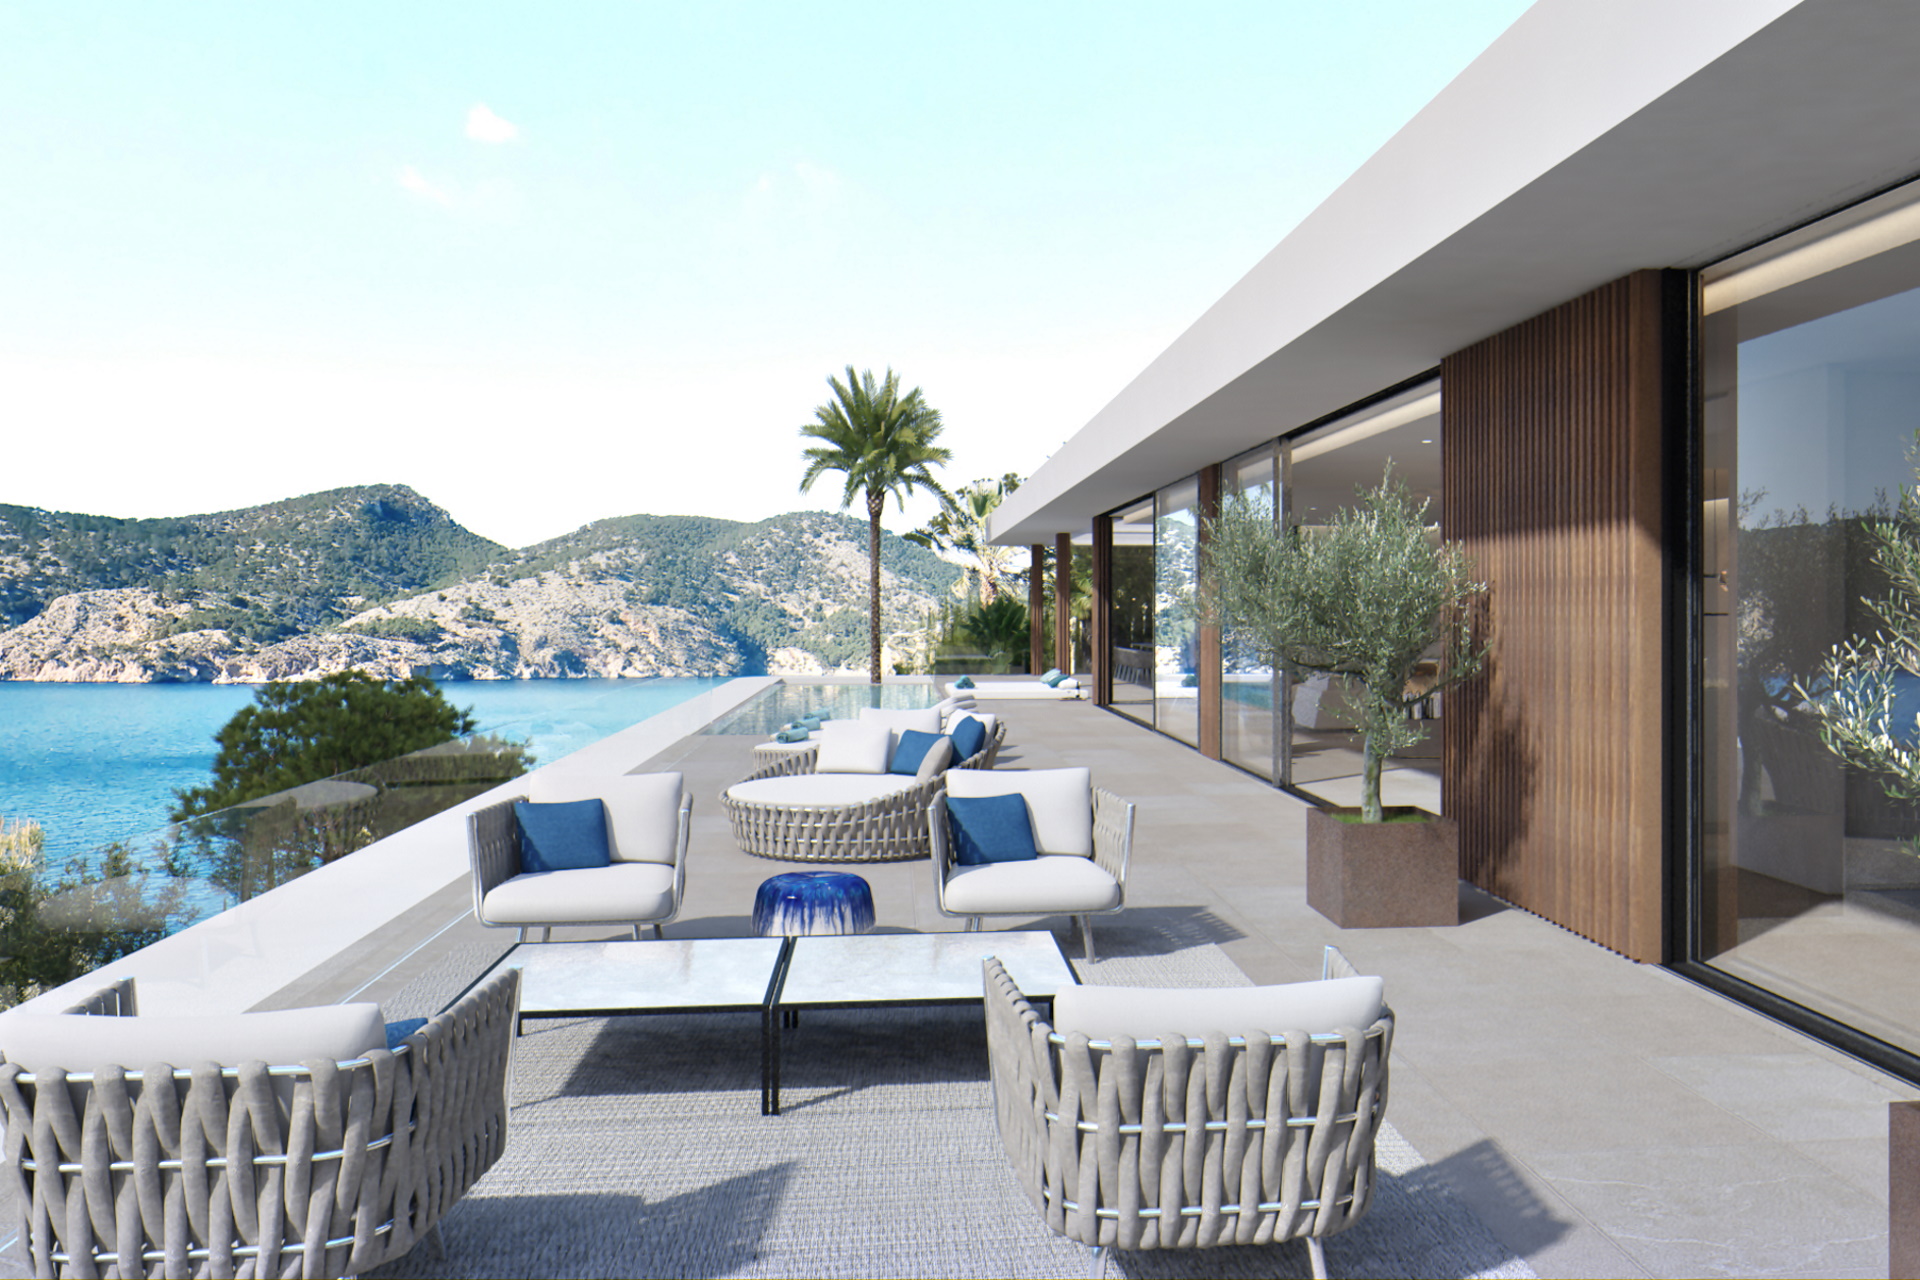 Camp de Mar: Villa project with fantastic sea views for sale in a quiet residential area